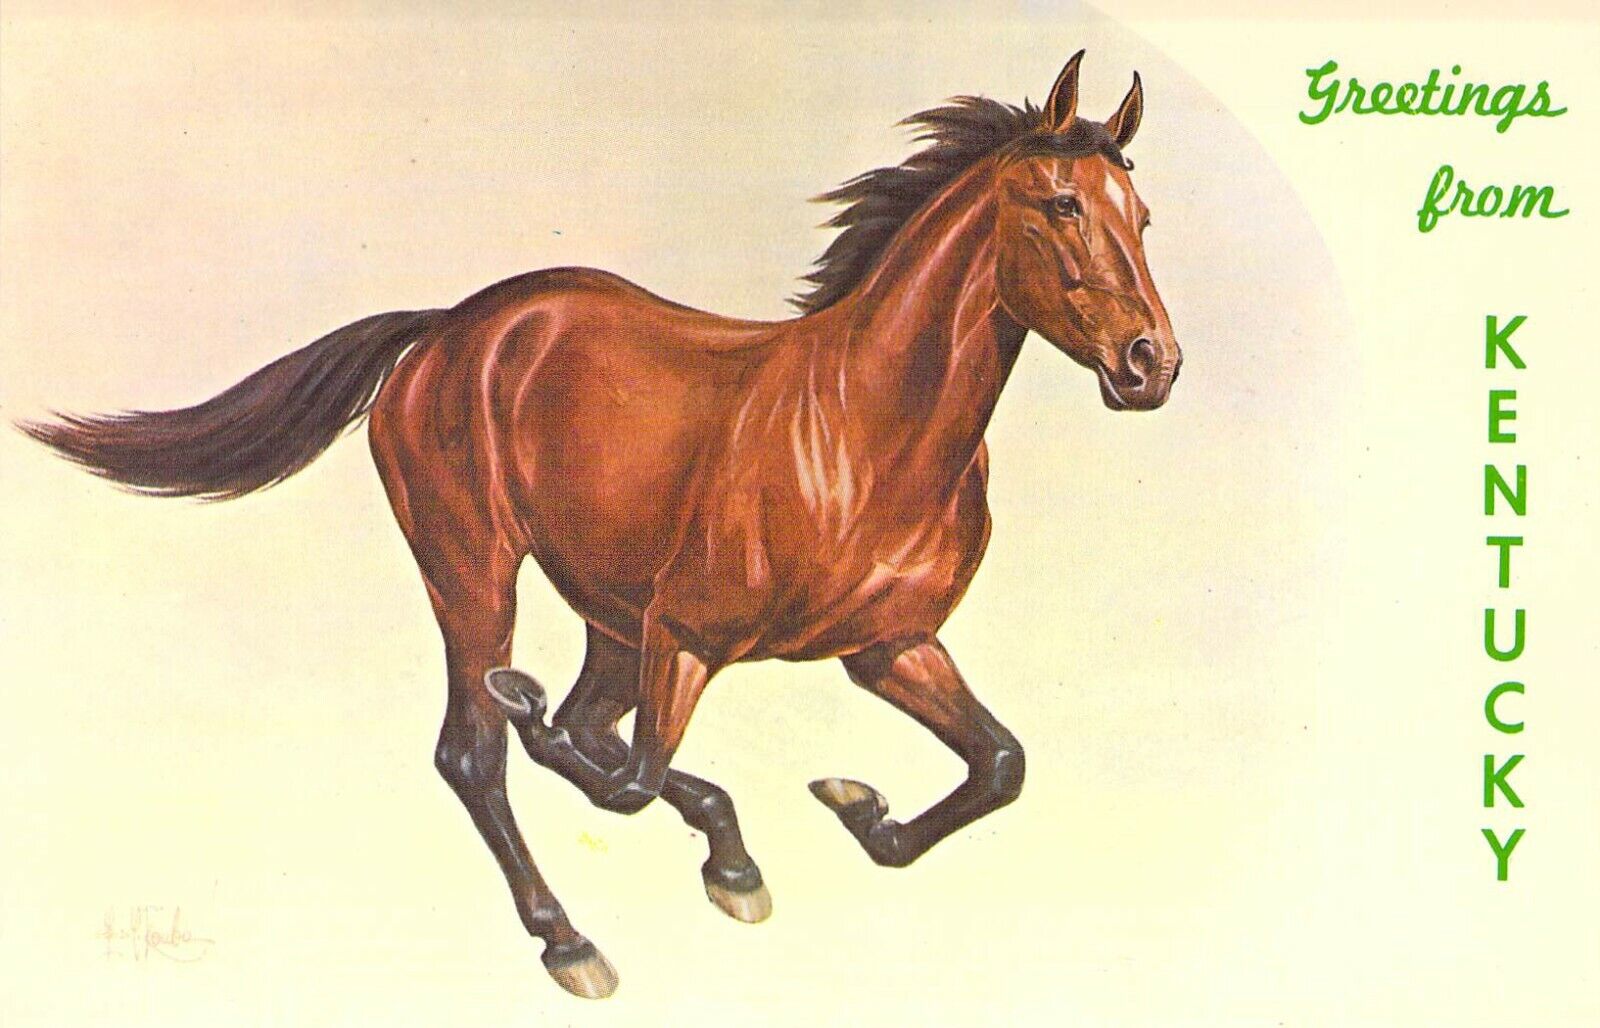 1968 Greetings from Kentucky HORSE RUNNING Artist Signed postcard C54